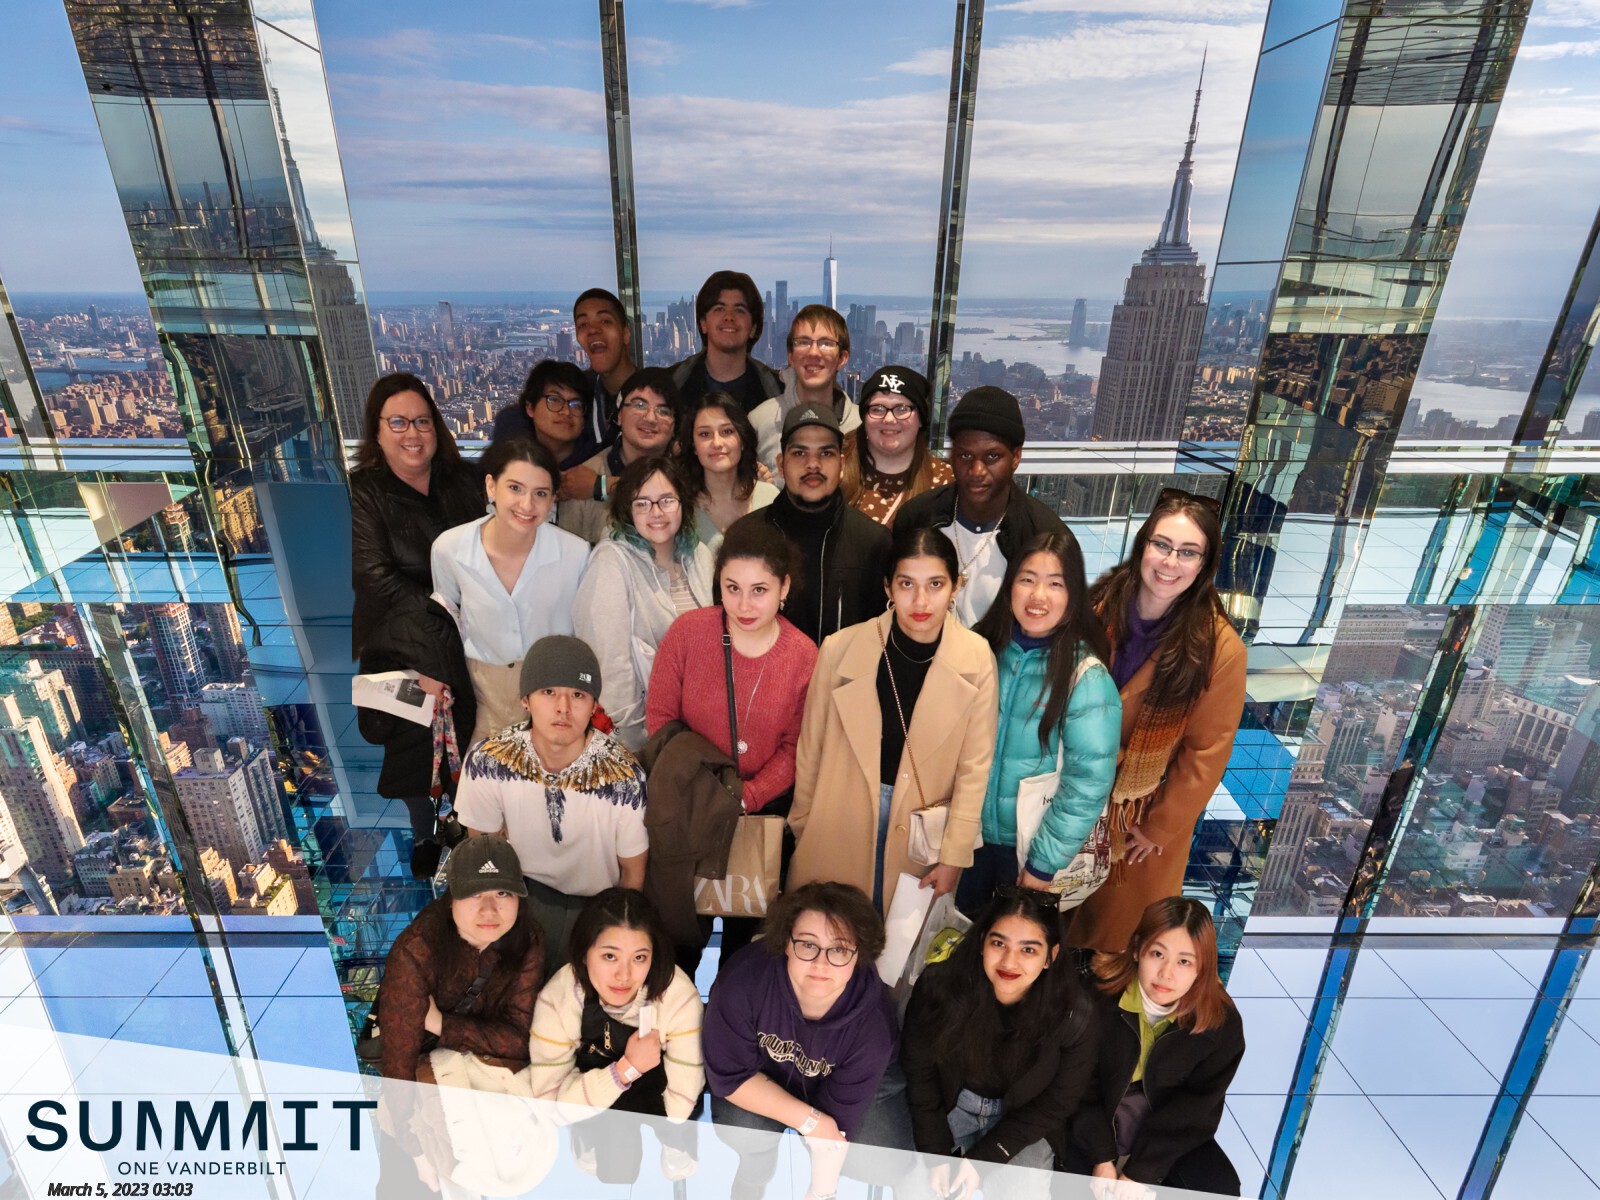 Mount Union students in New York City on Fall Break Trip